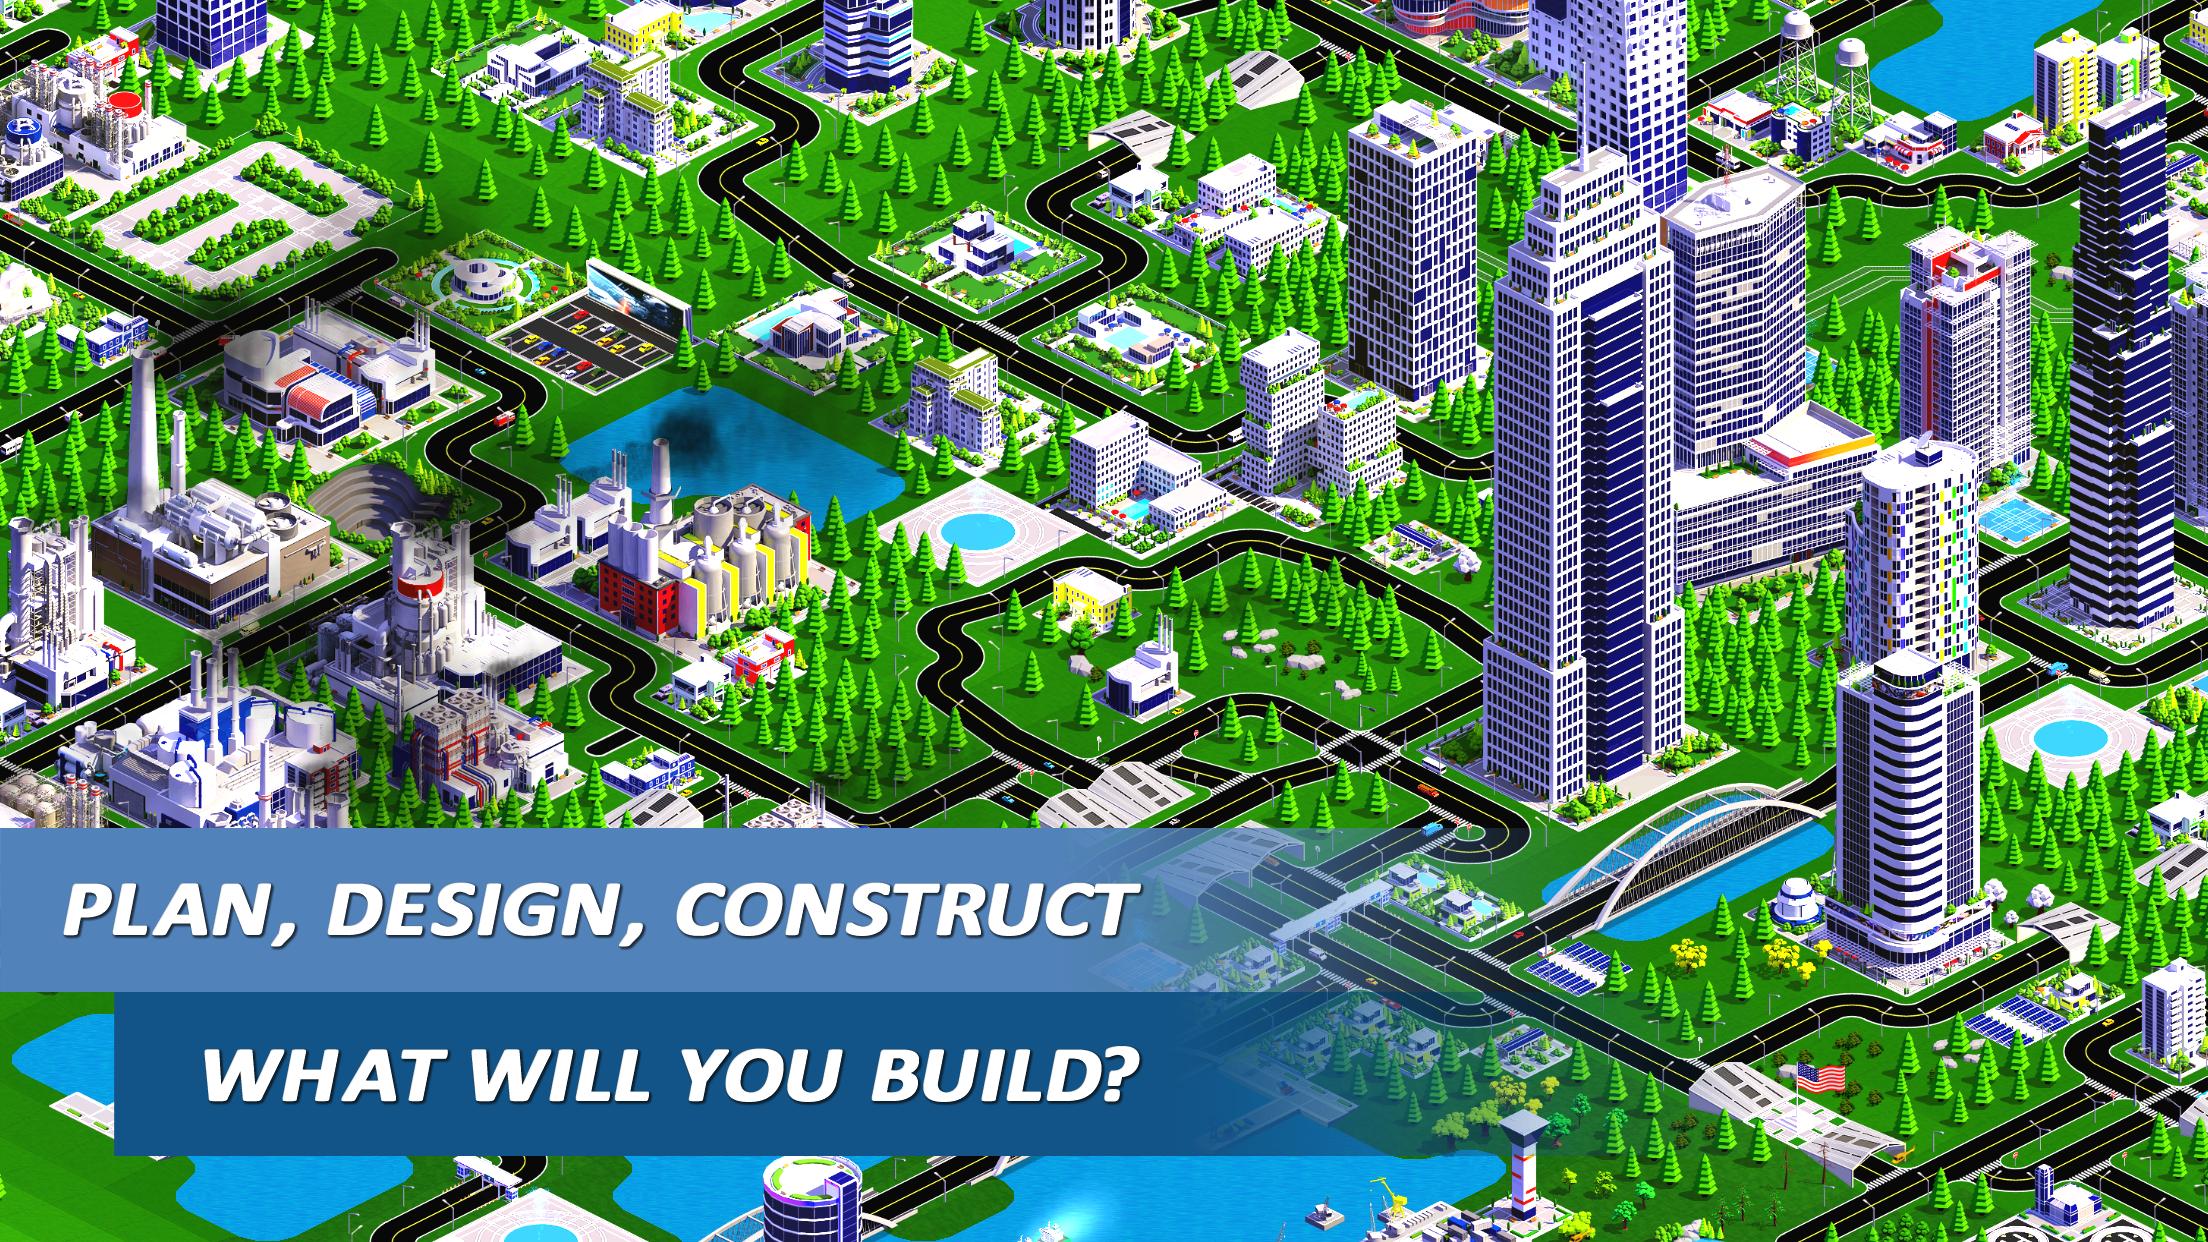 The building game 2. Сити Билдинг игра. Десигнер Сити 2. Игра про постройку города. Игра построить город.